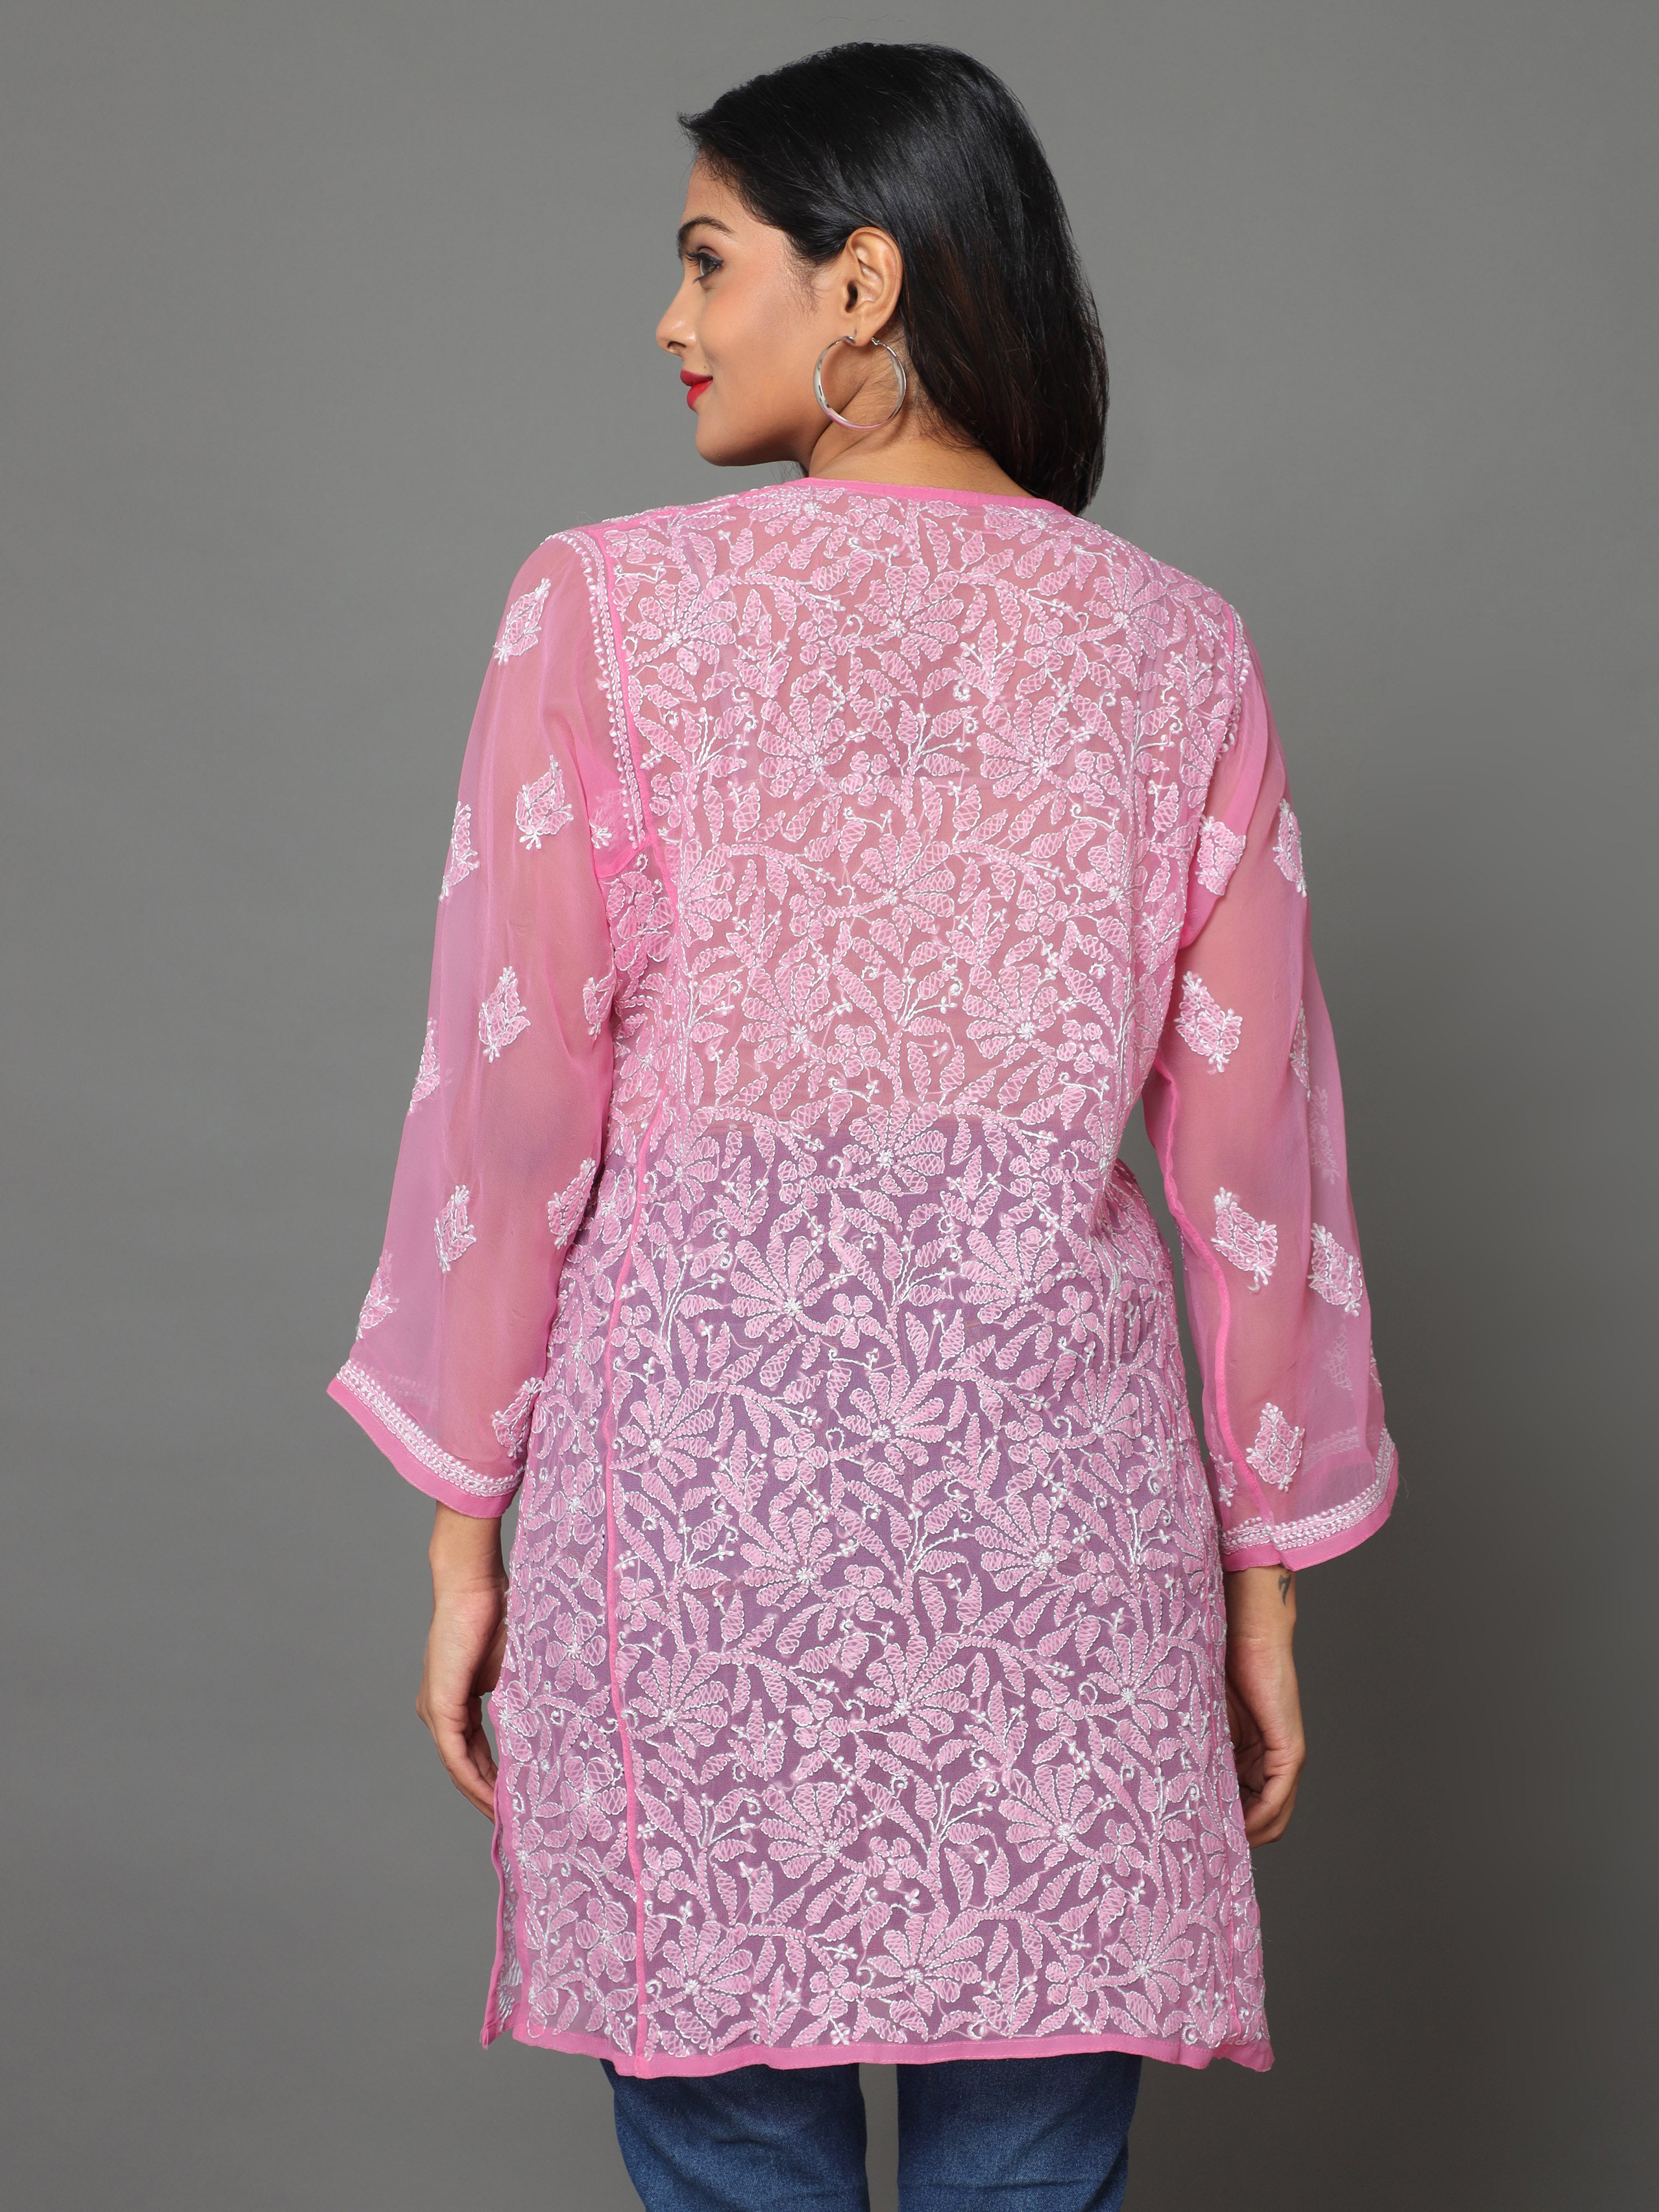 HerClozet Women's Lucknowi Hand Embroidery Chikankari Georgette Kurti -Size 40 Pink